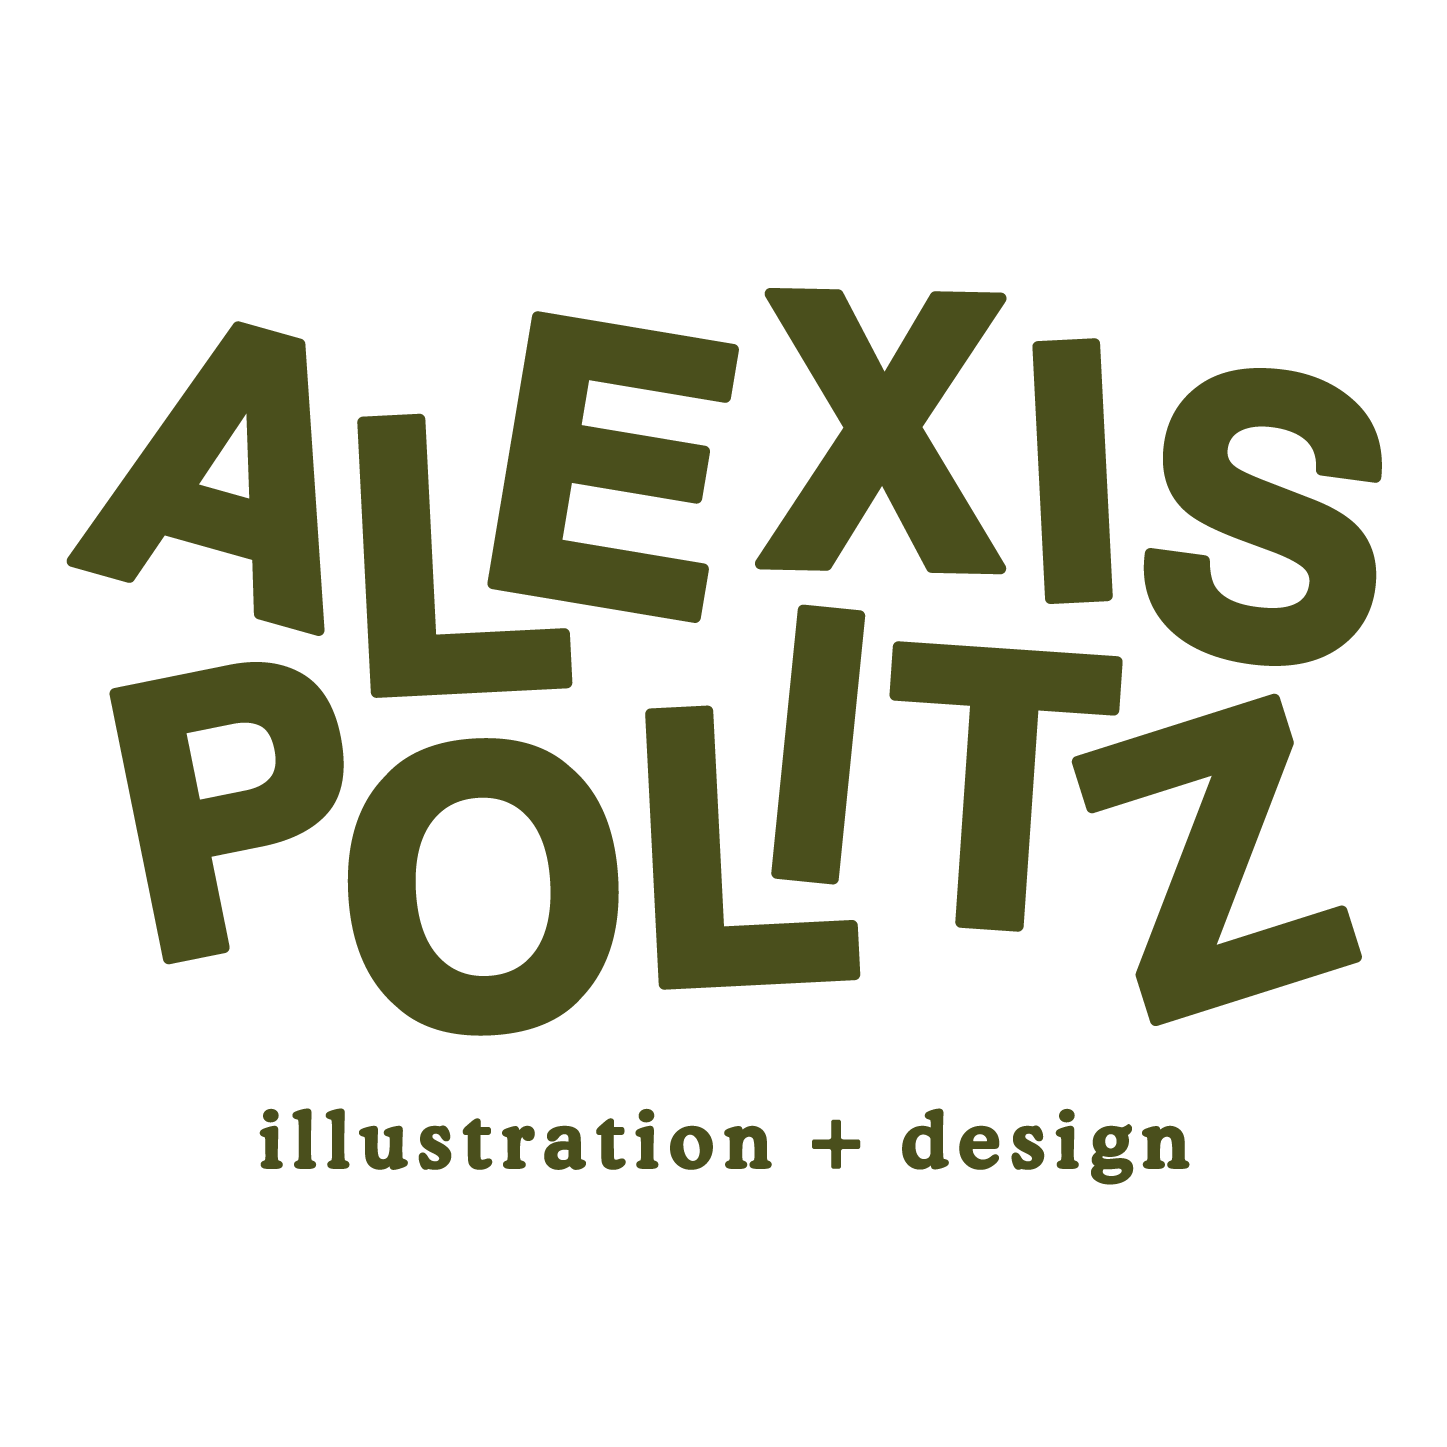 Alexis Politz